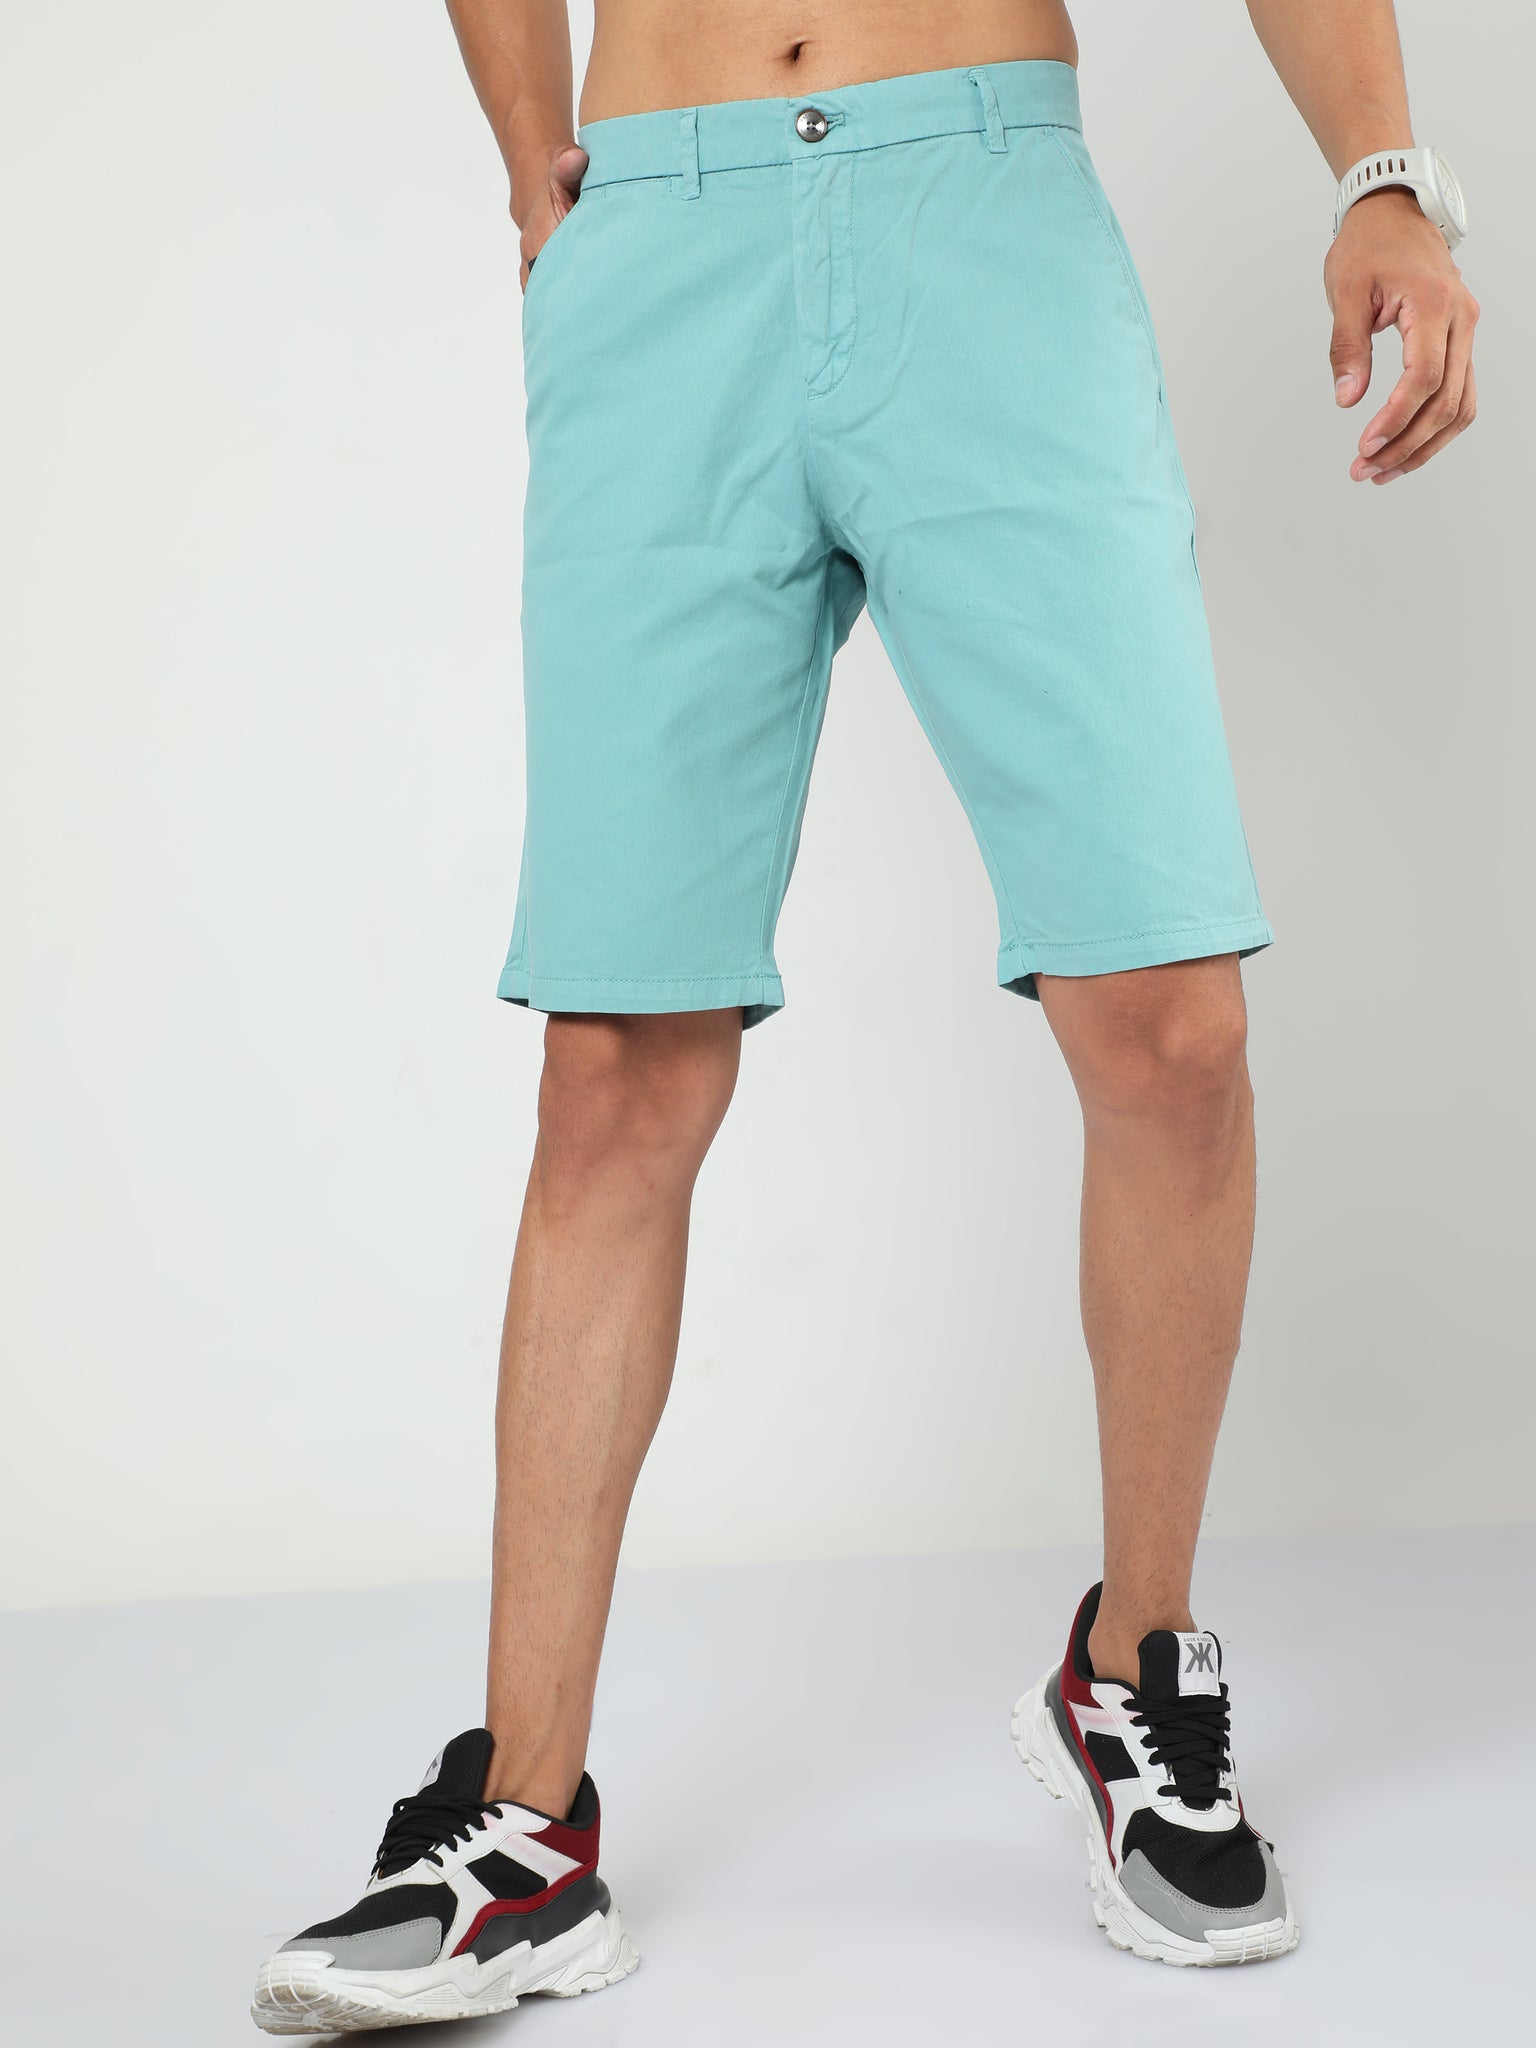 French Ocean Blue Shorts